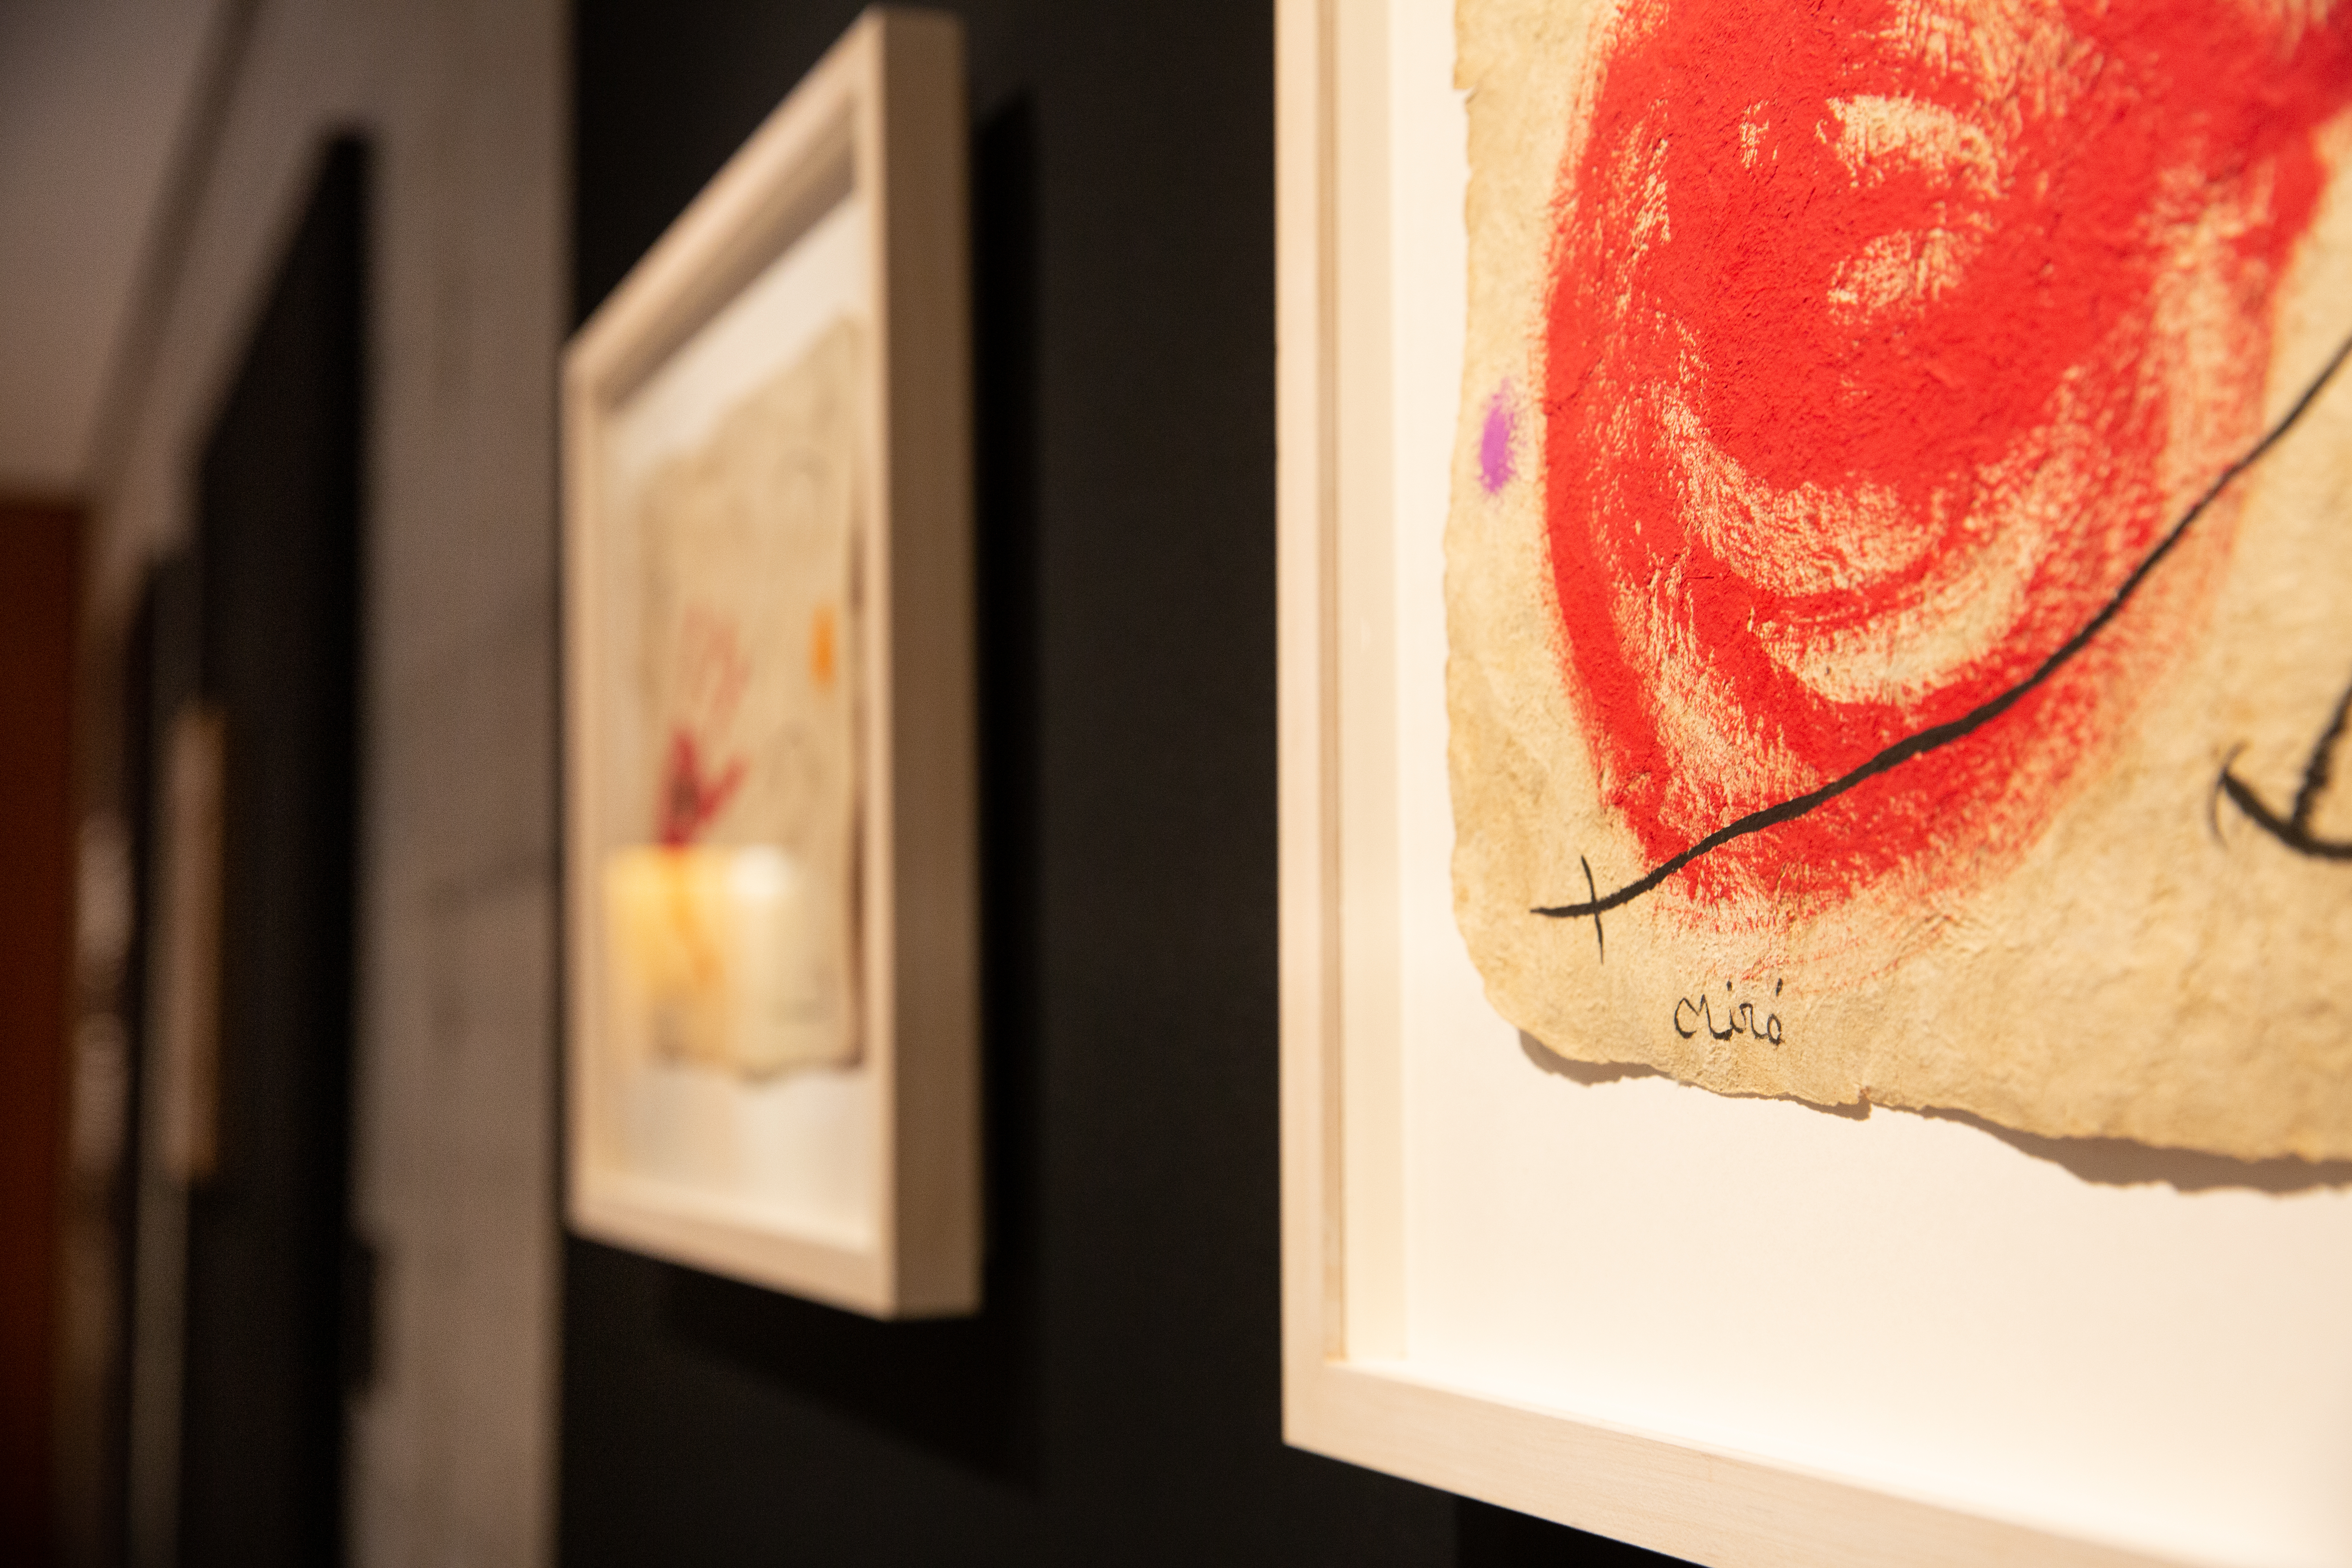 Dos acrílicos sobre papel, de Joan Miró, 1968.